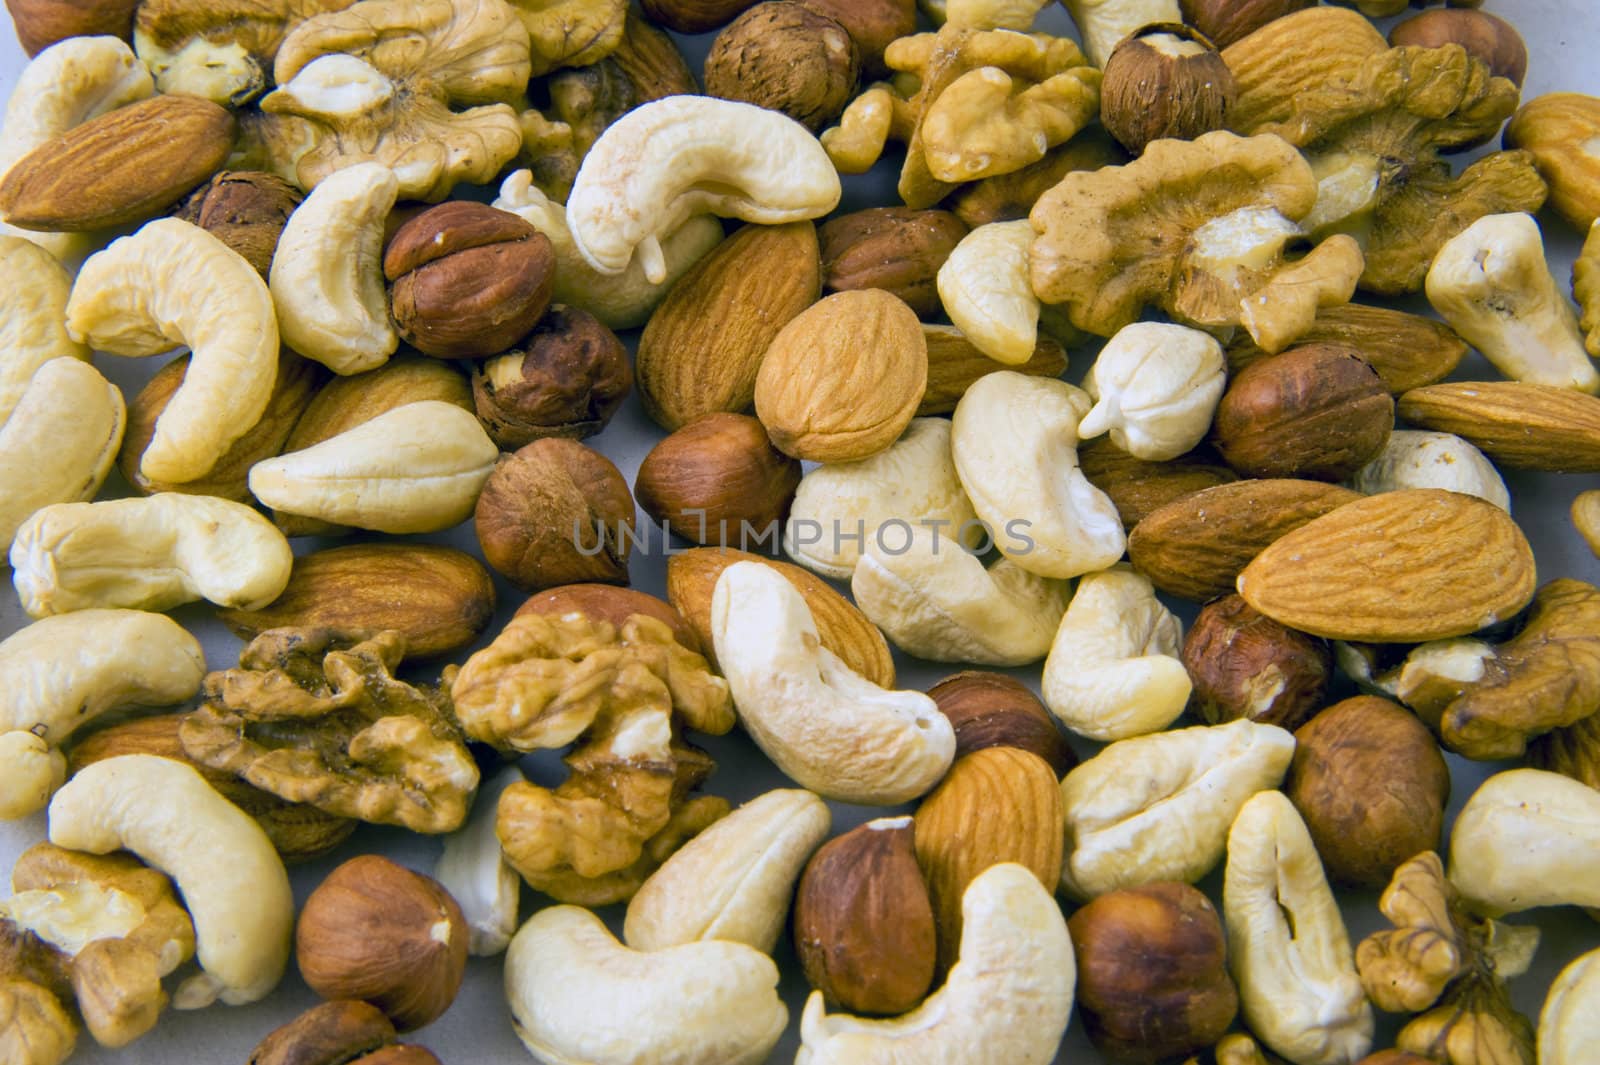 Nuts by Alenmax